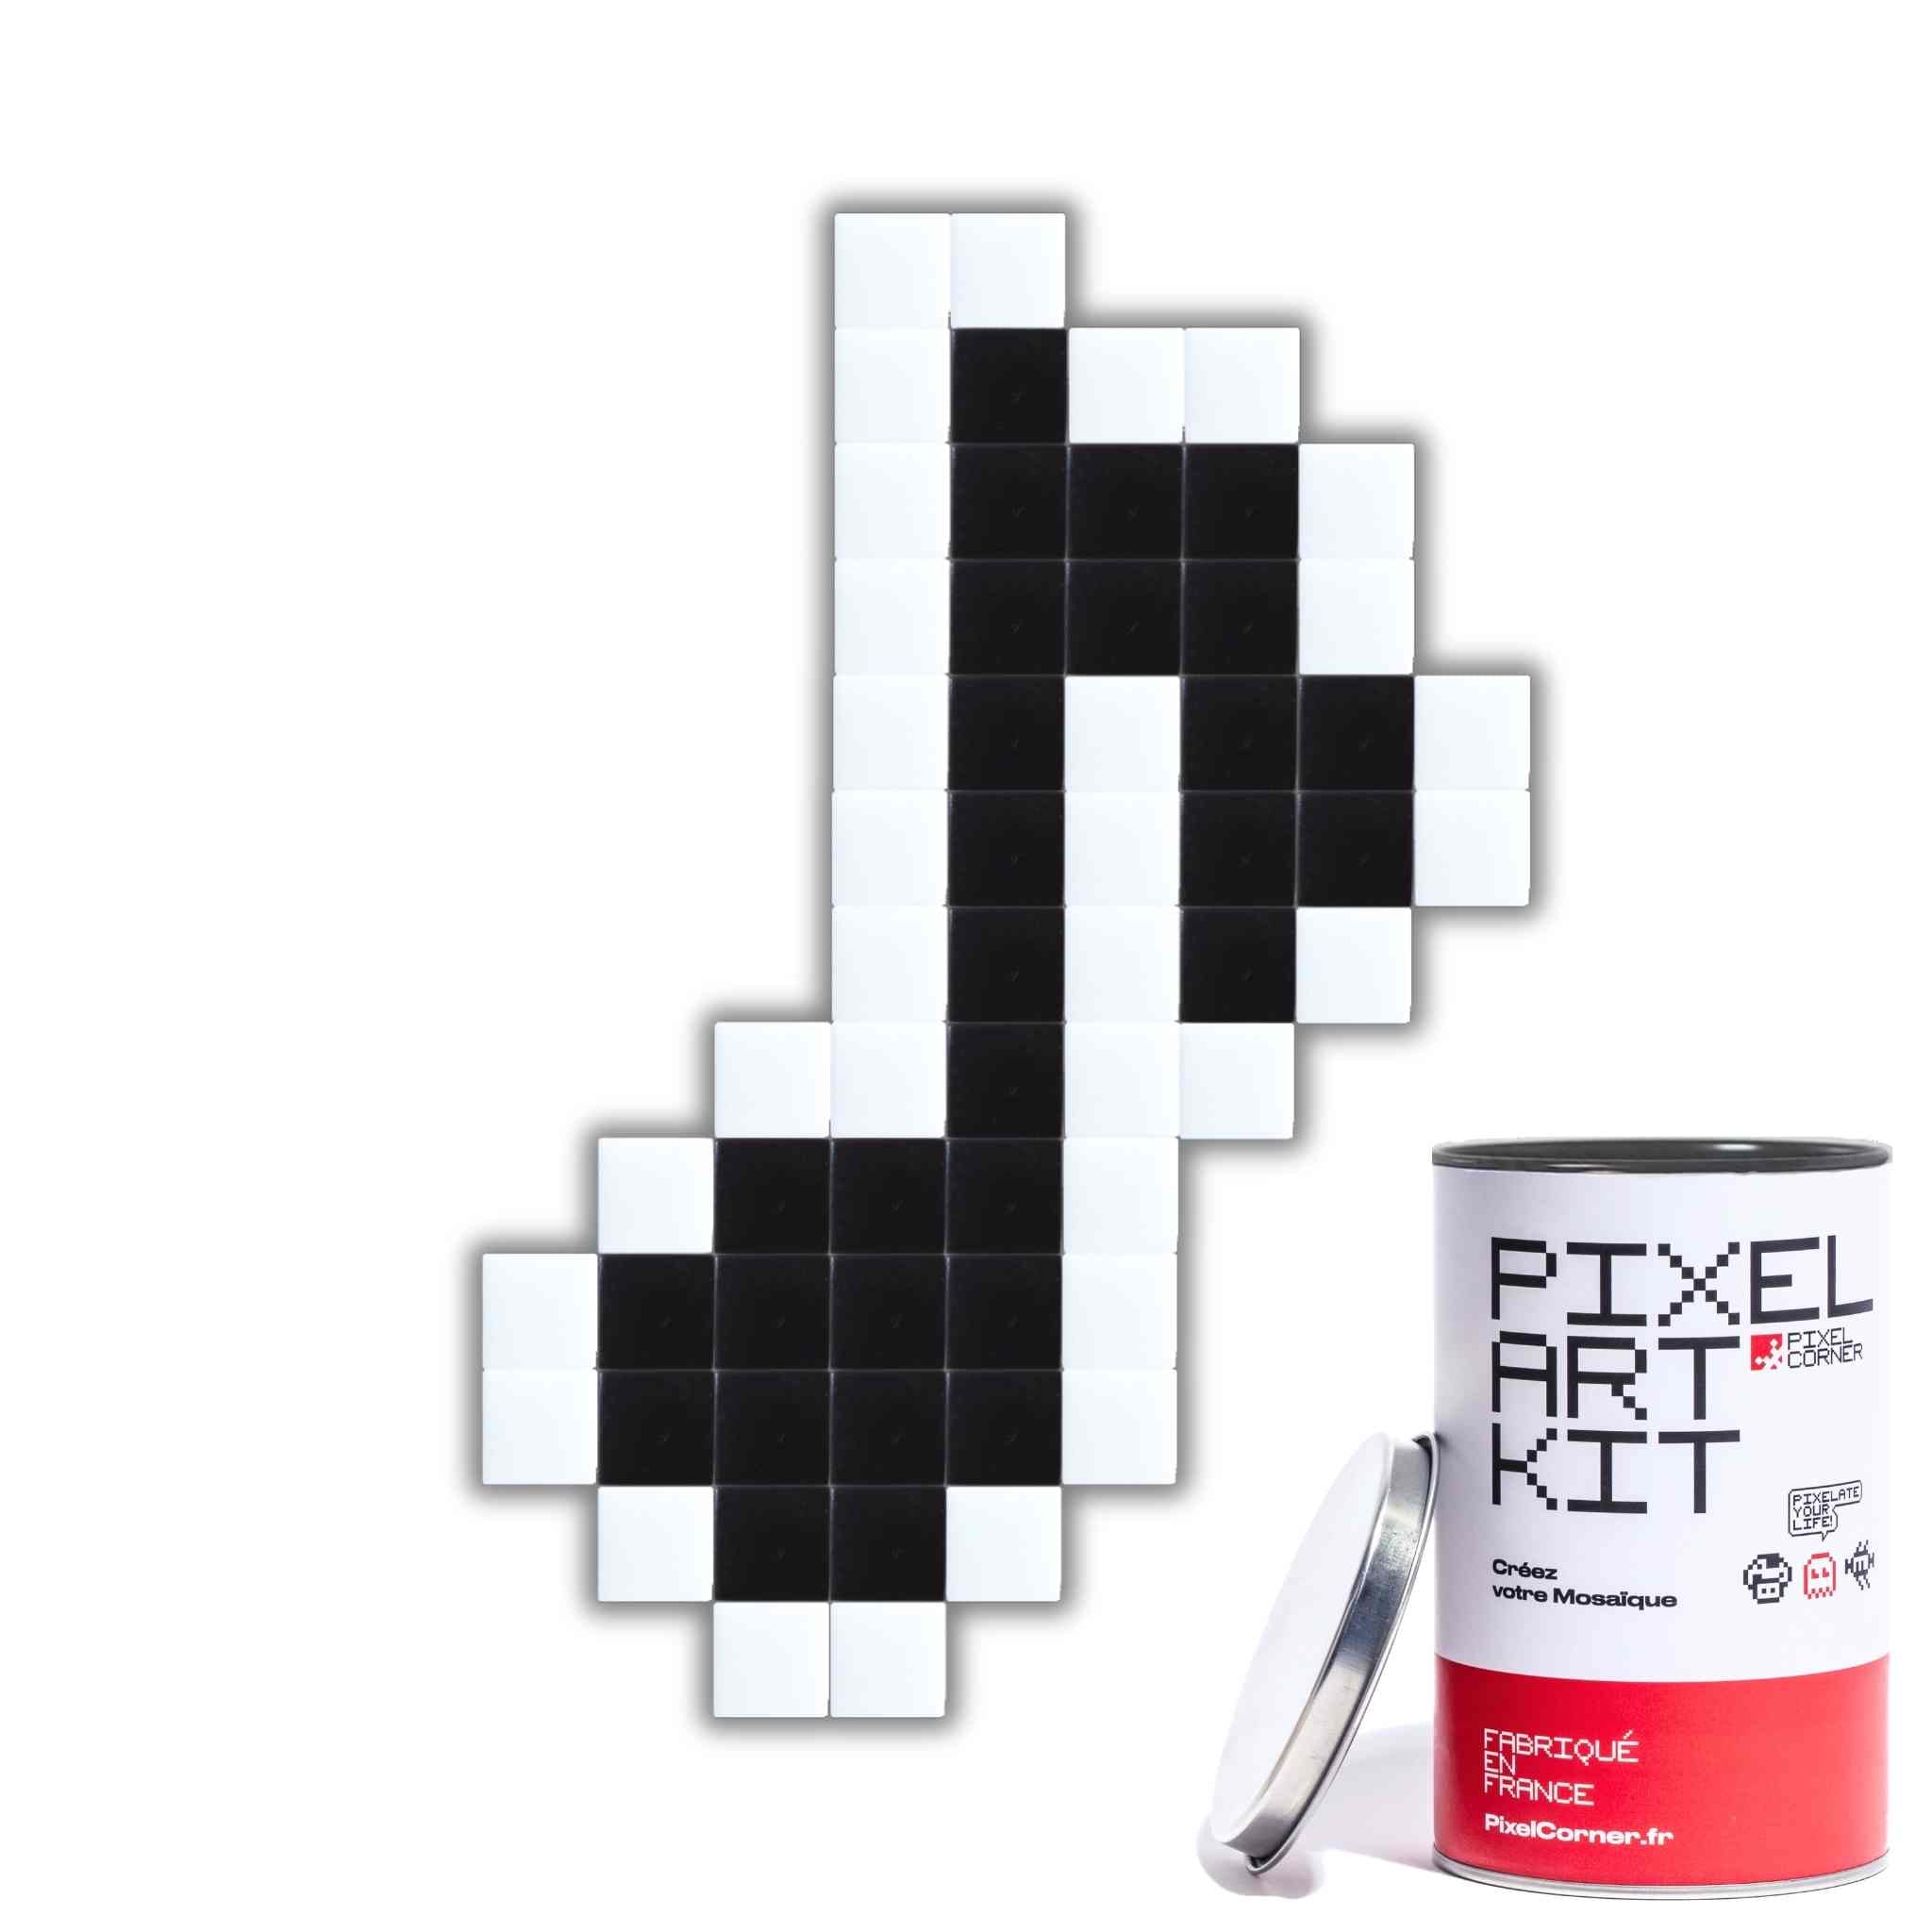 Pixel Art Kit "La Croche" par Pixel Corner - Kits de loisirs créatifs